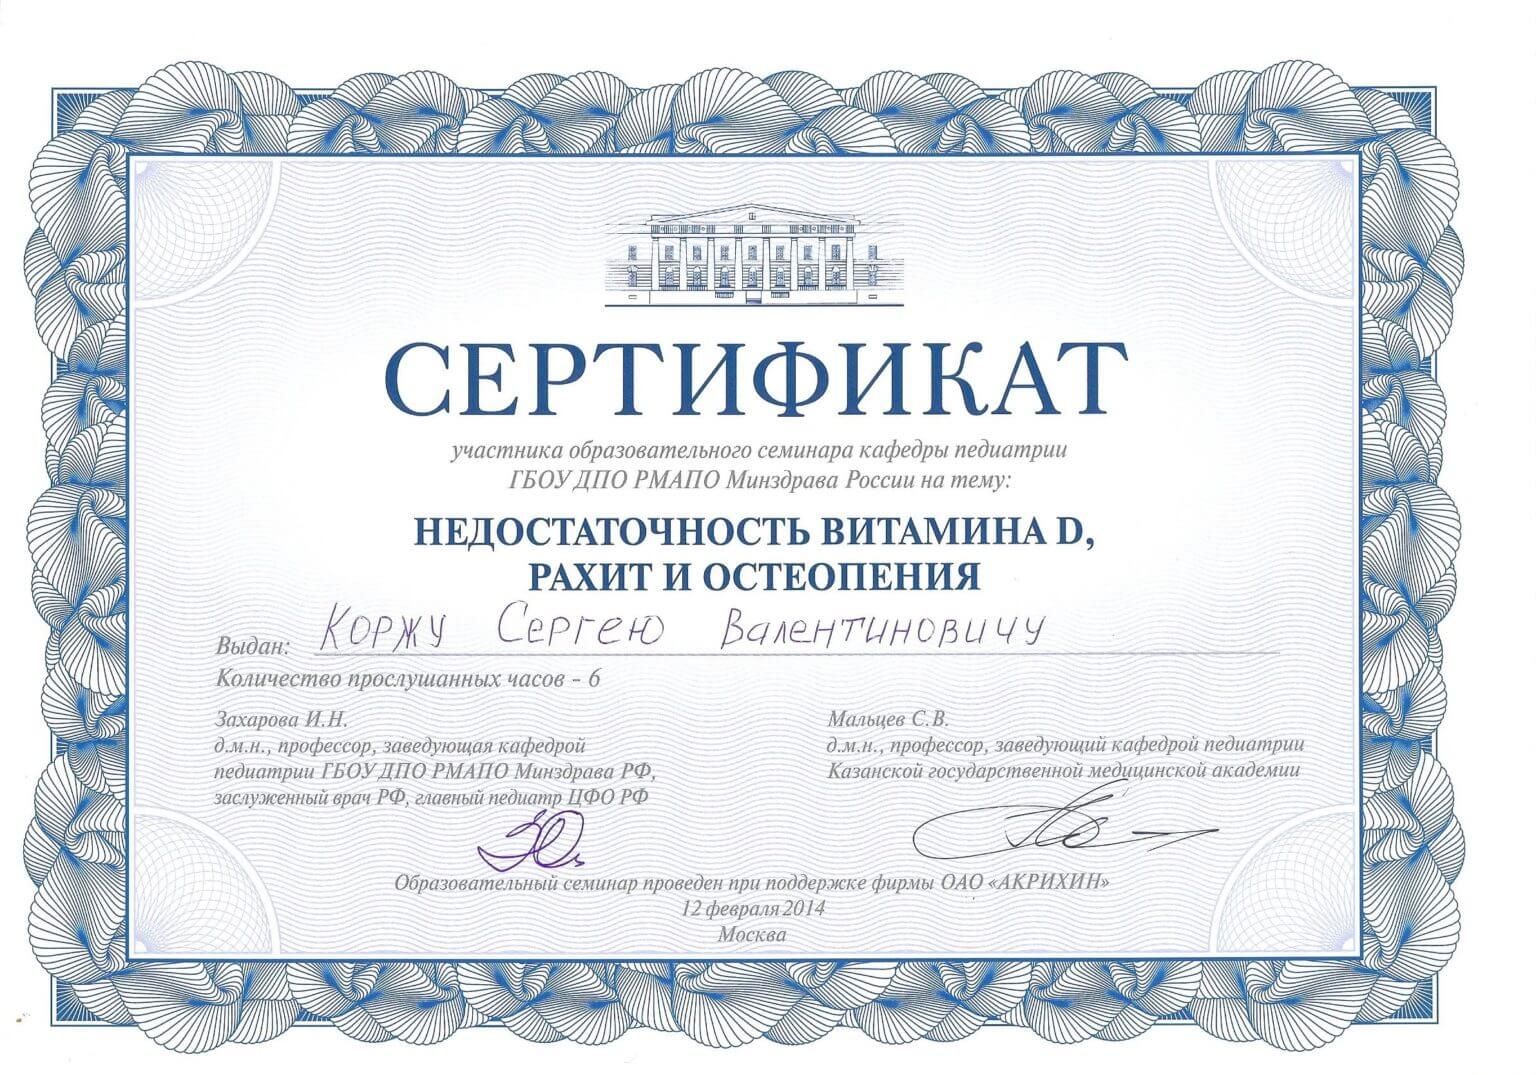 Сертификат врача педиатра